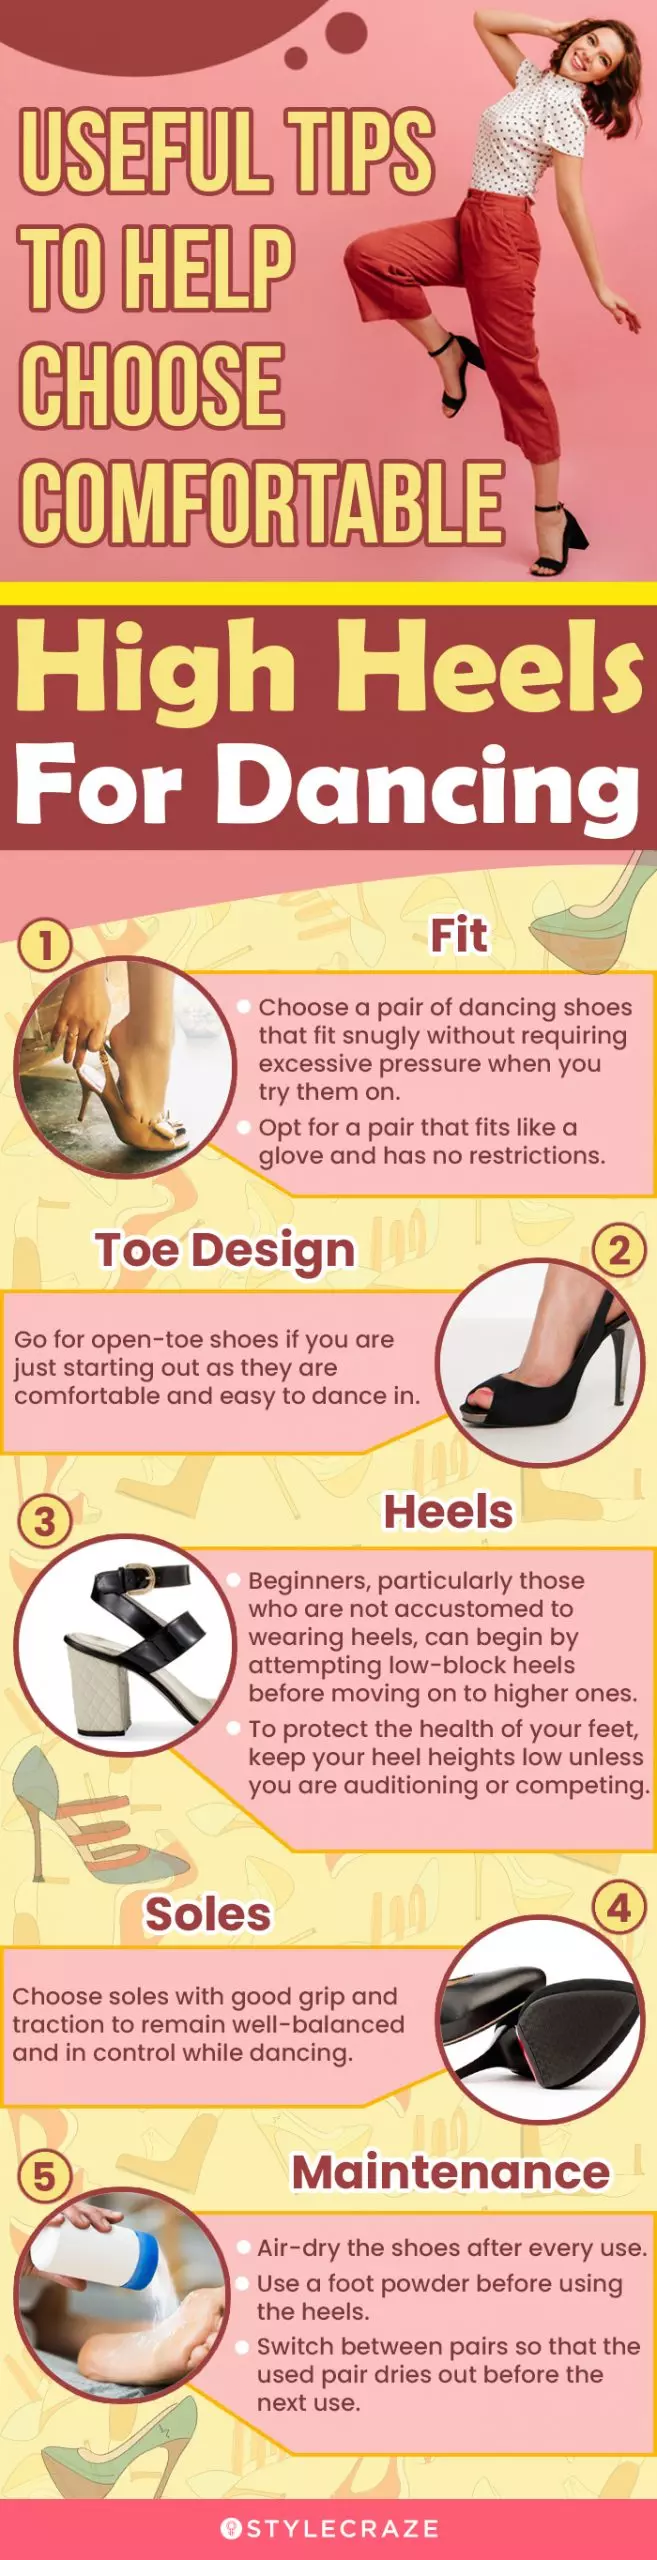 Useful Tips To Help Choose Comfortable High Heels For Dancing